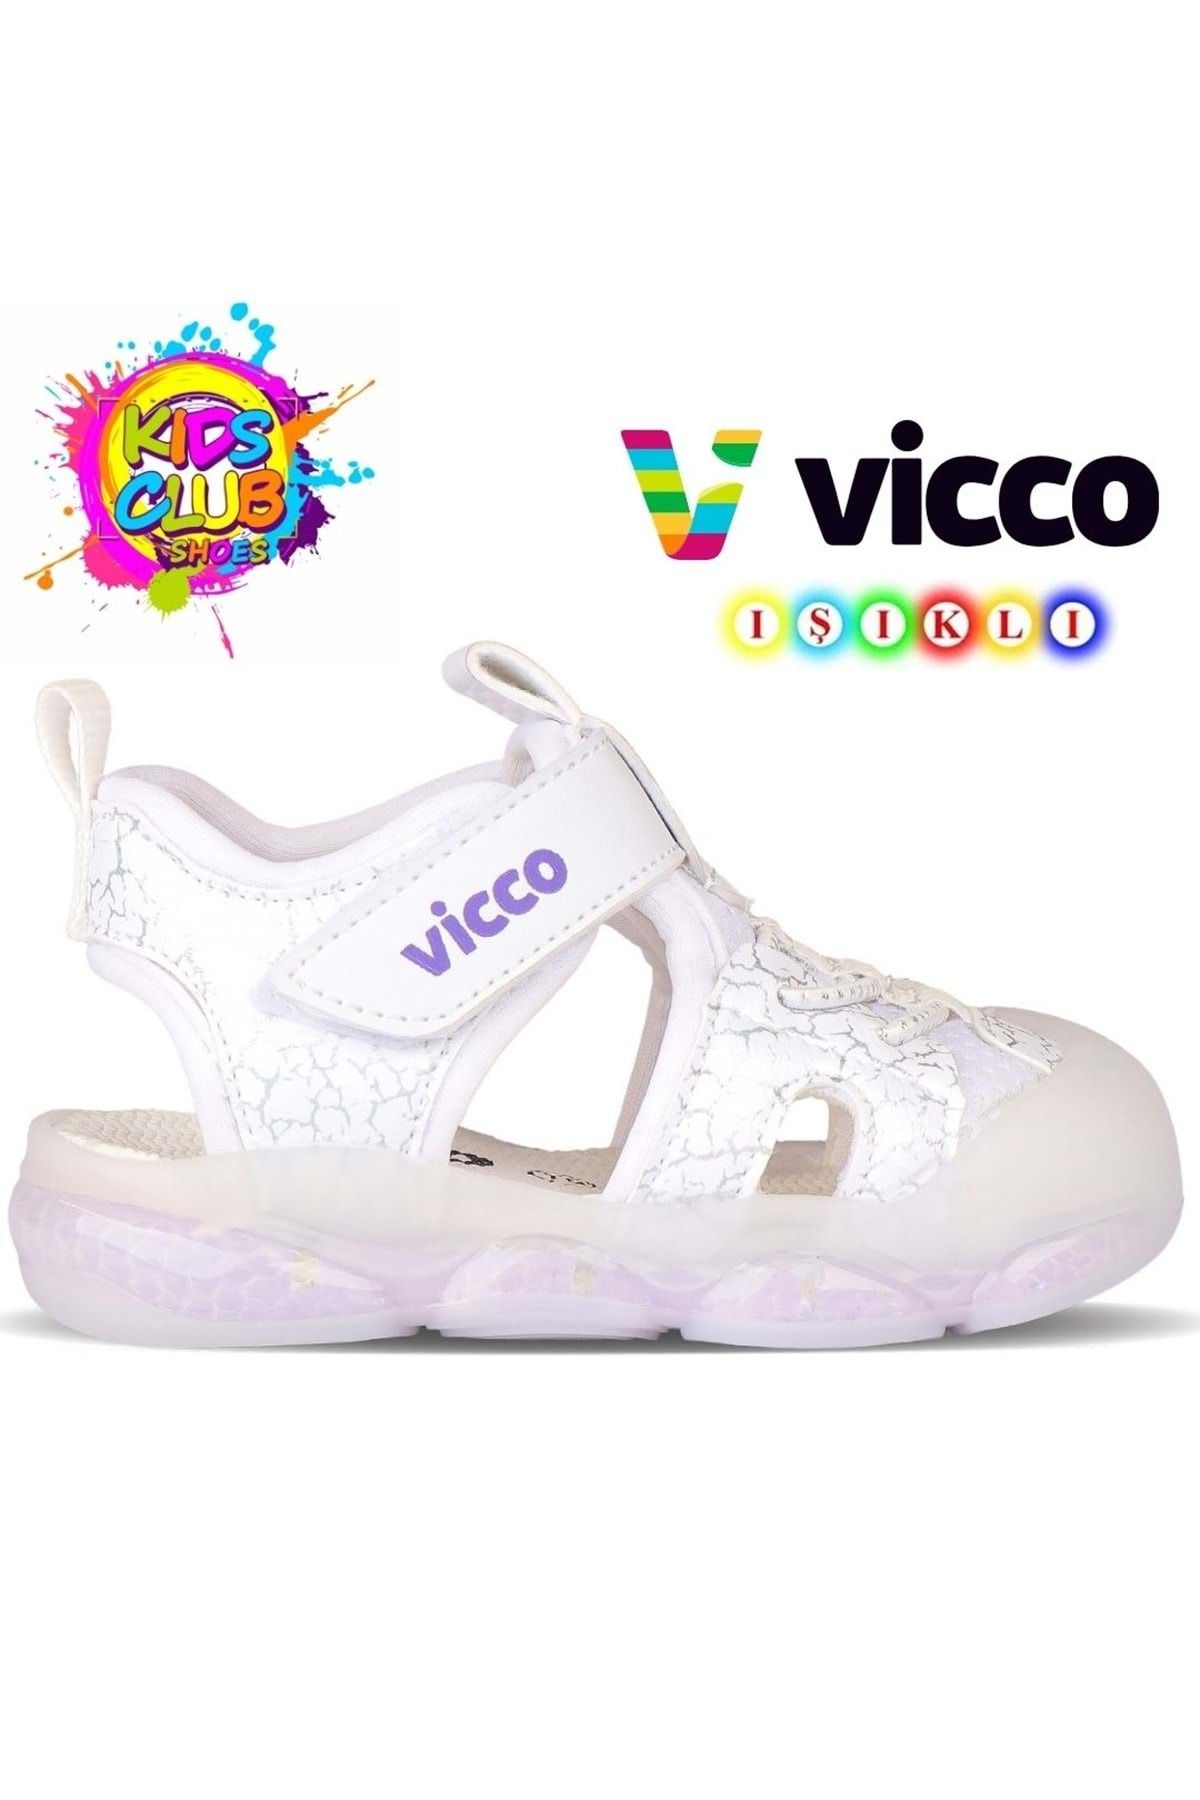 Kids Club Shoes Vicco Monrovia İlk Adım Bebek Ortopedik Çocuk Spor Sandalet BEYAZ